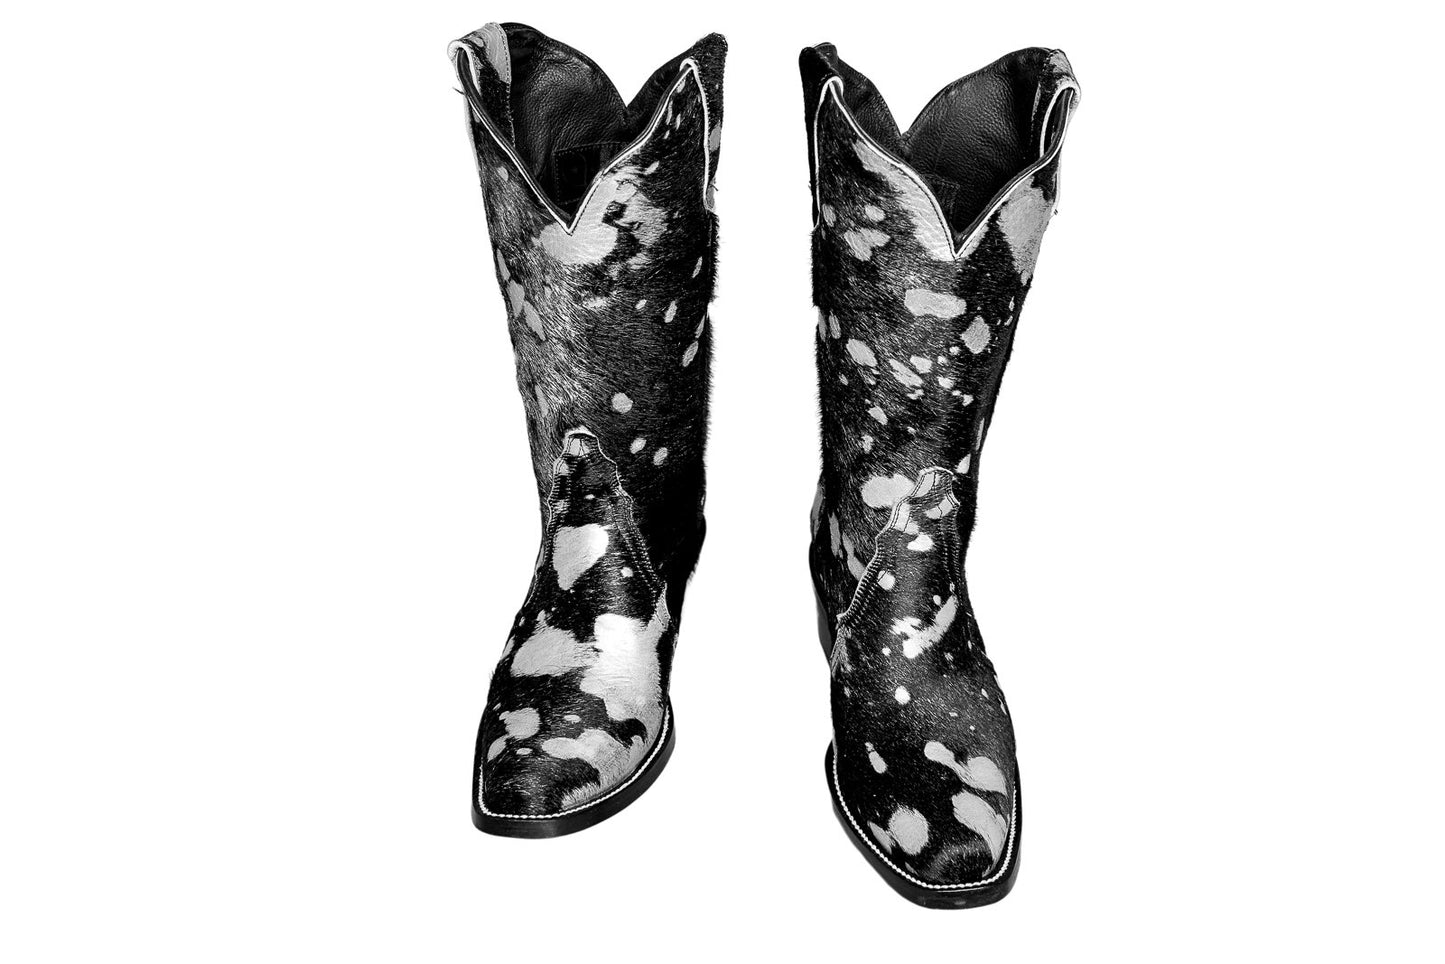 The Carmen Boots - Talla 7 US